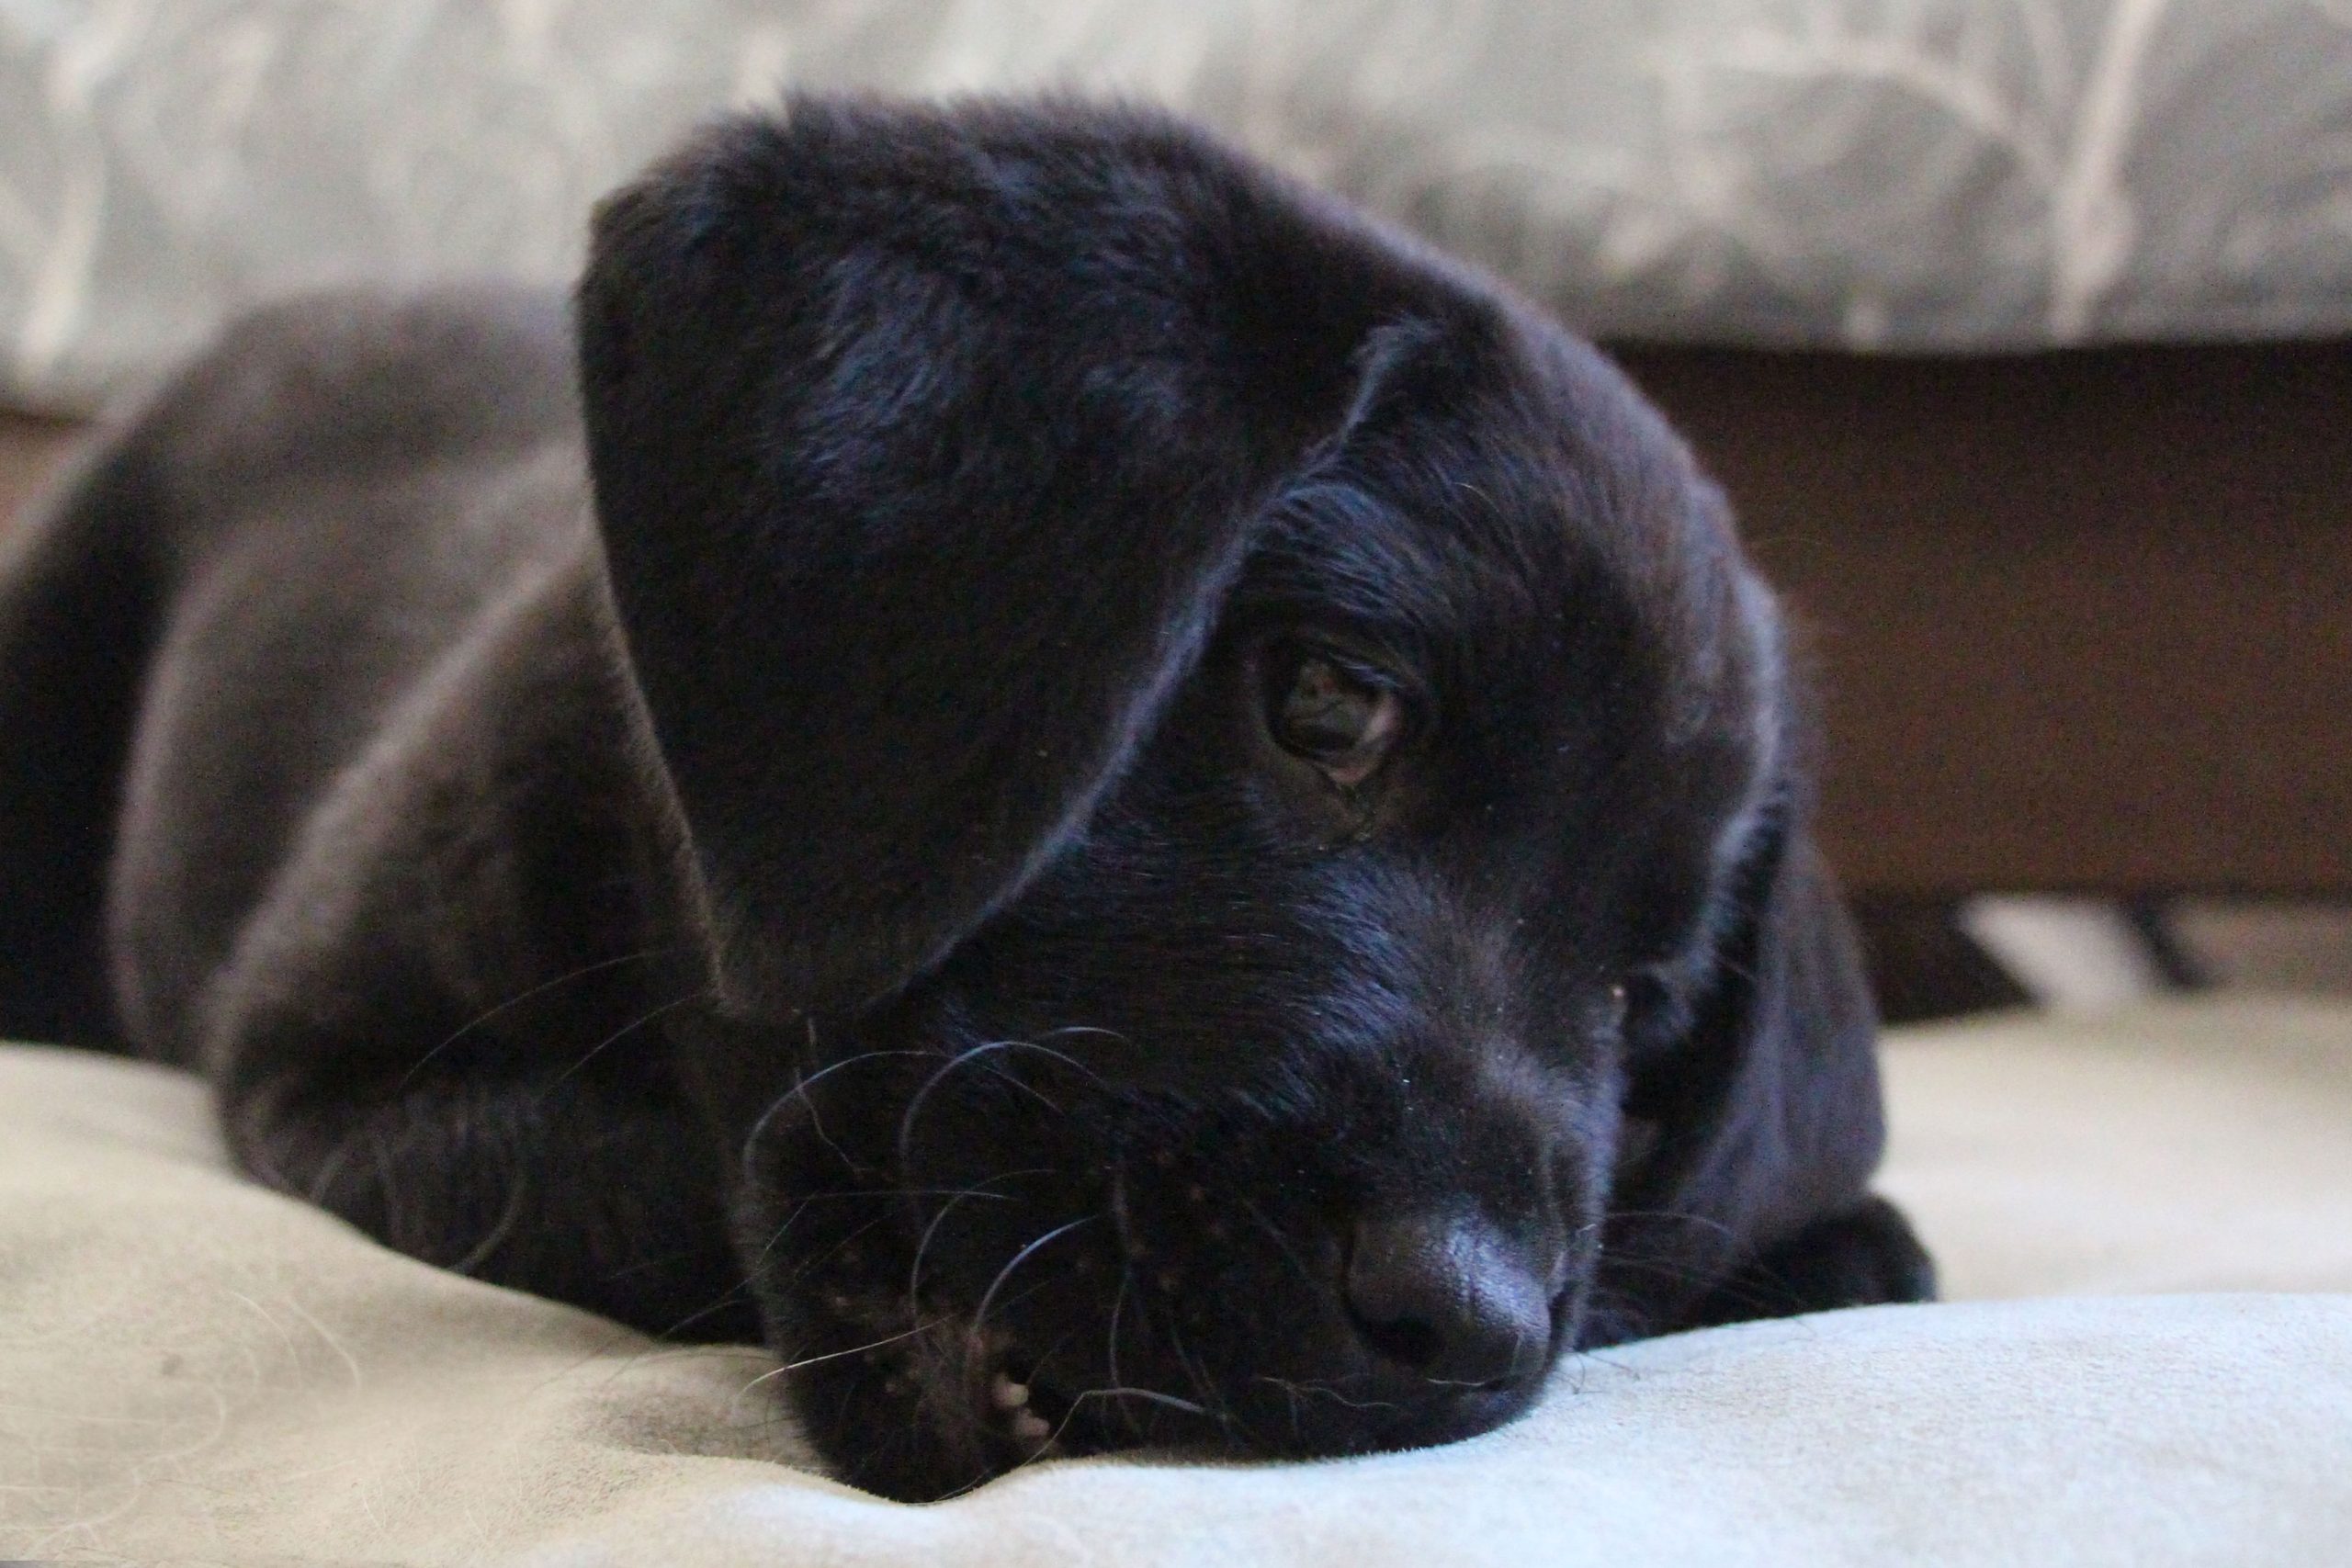 Why Does My Dog Suck On Blankets? - black lab puppy sucking on blanket.